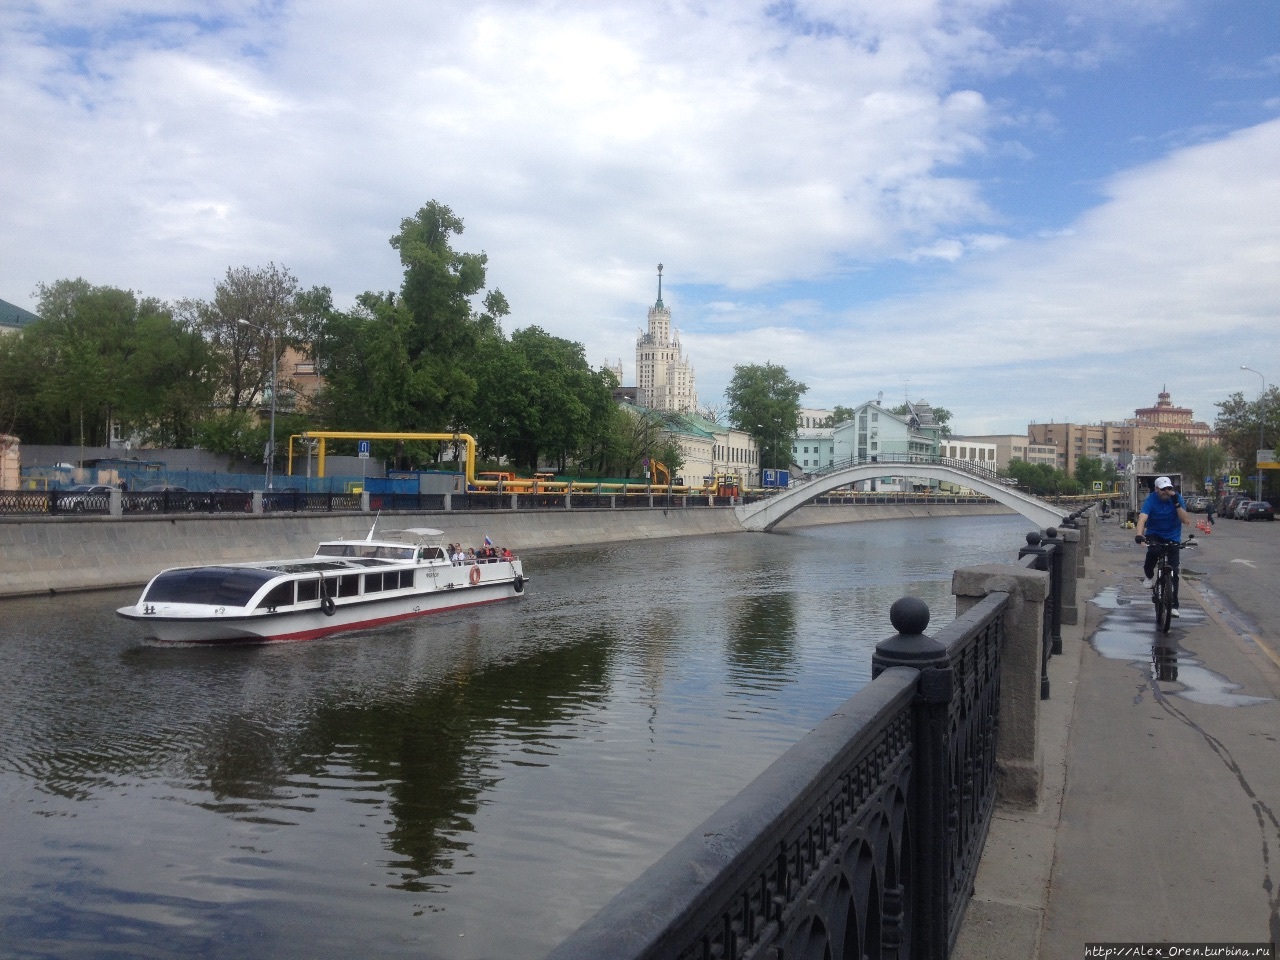 Теплоход с туристами на Водоотводном канале. Москва, Россия